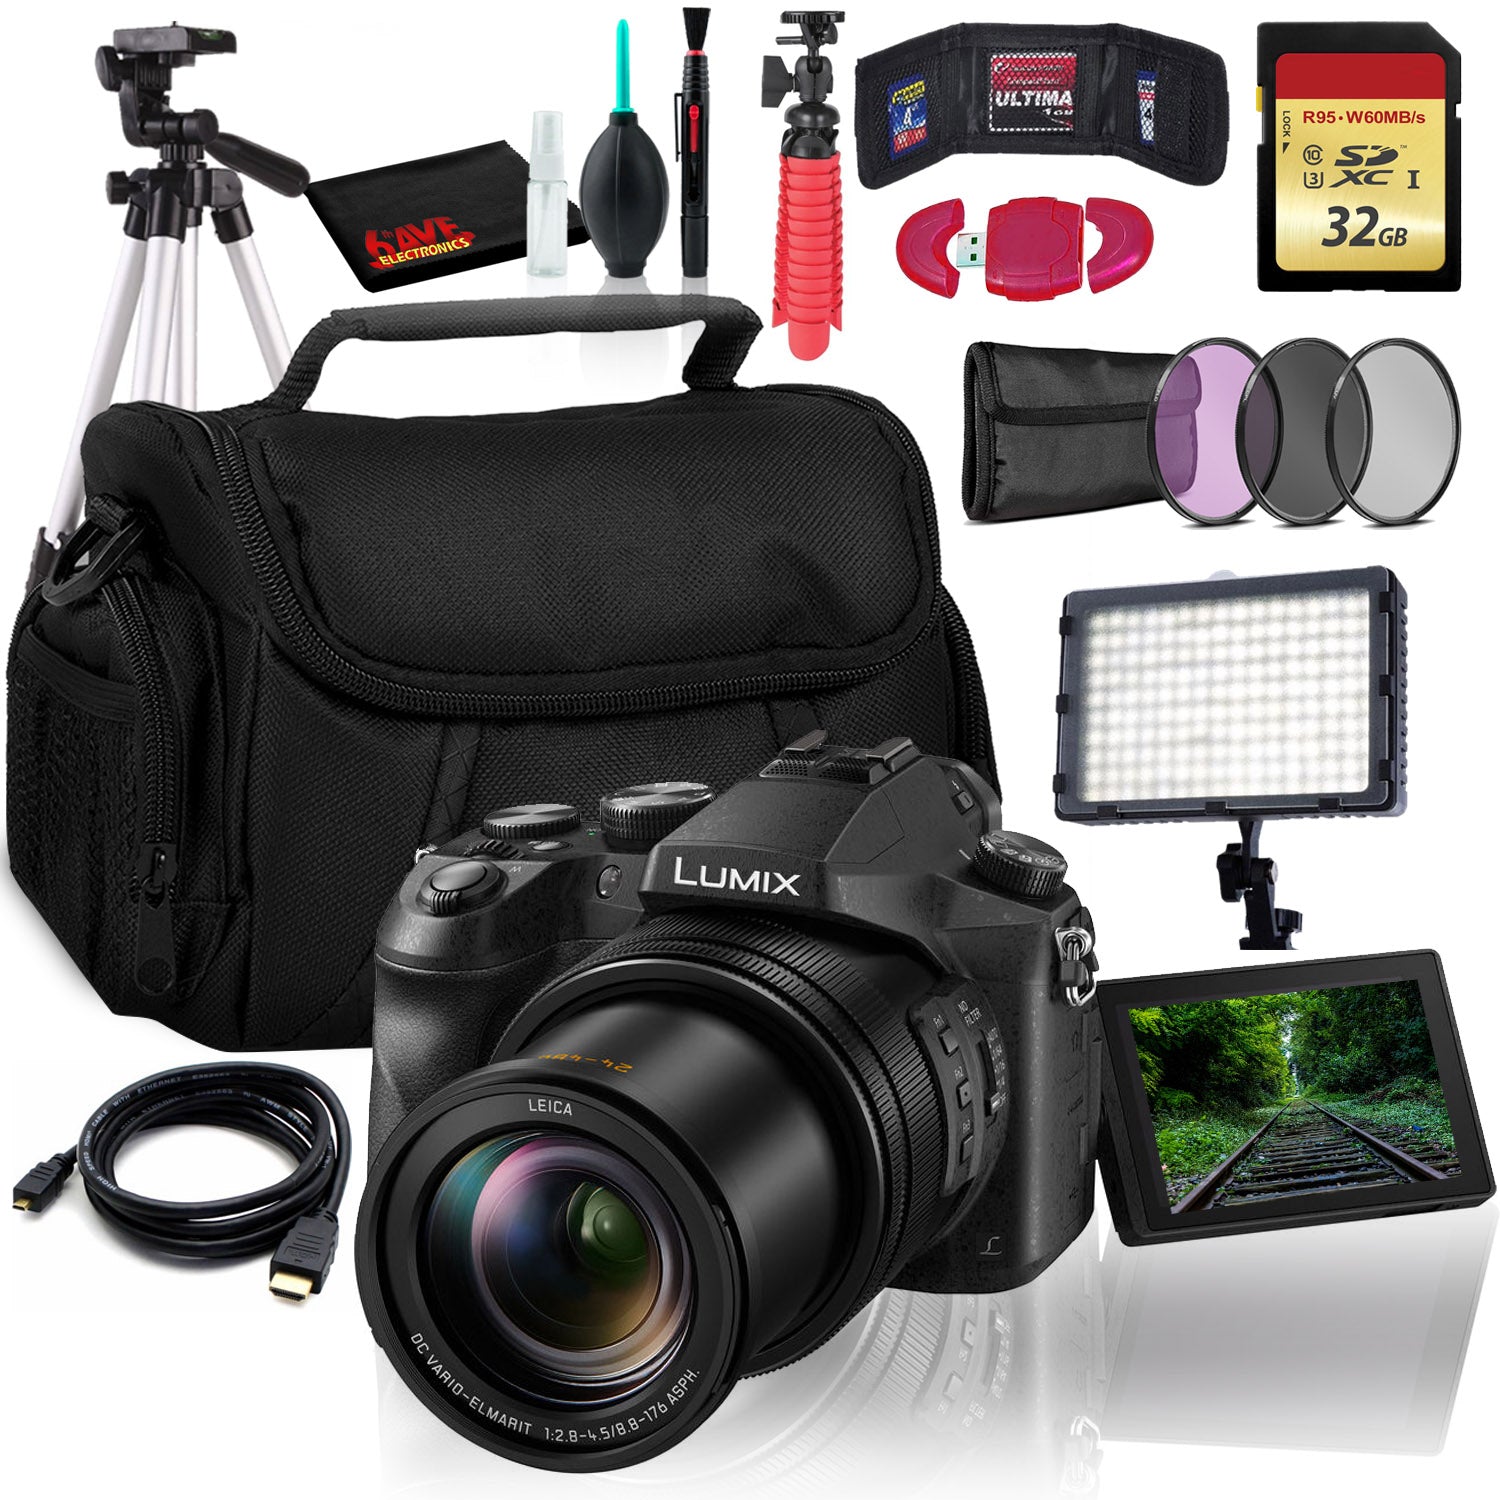 Panasonic Lumix DMC-FZ2500 Digital Camera with Tripod Kit Starter Bundle